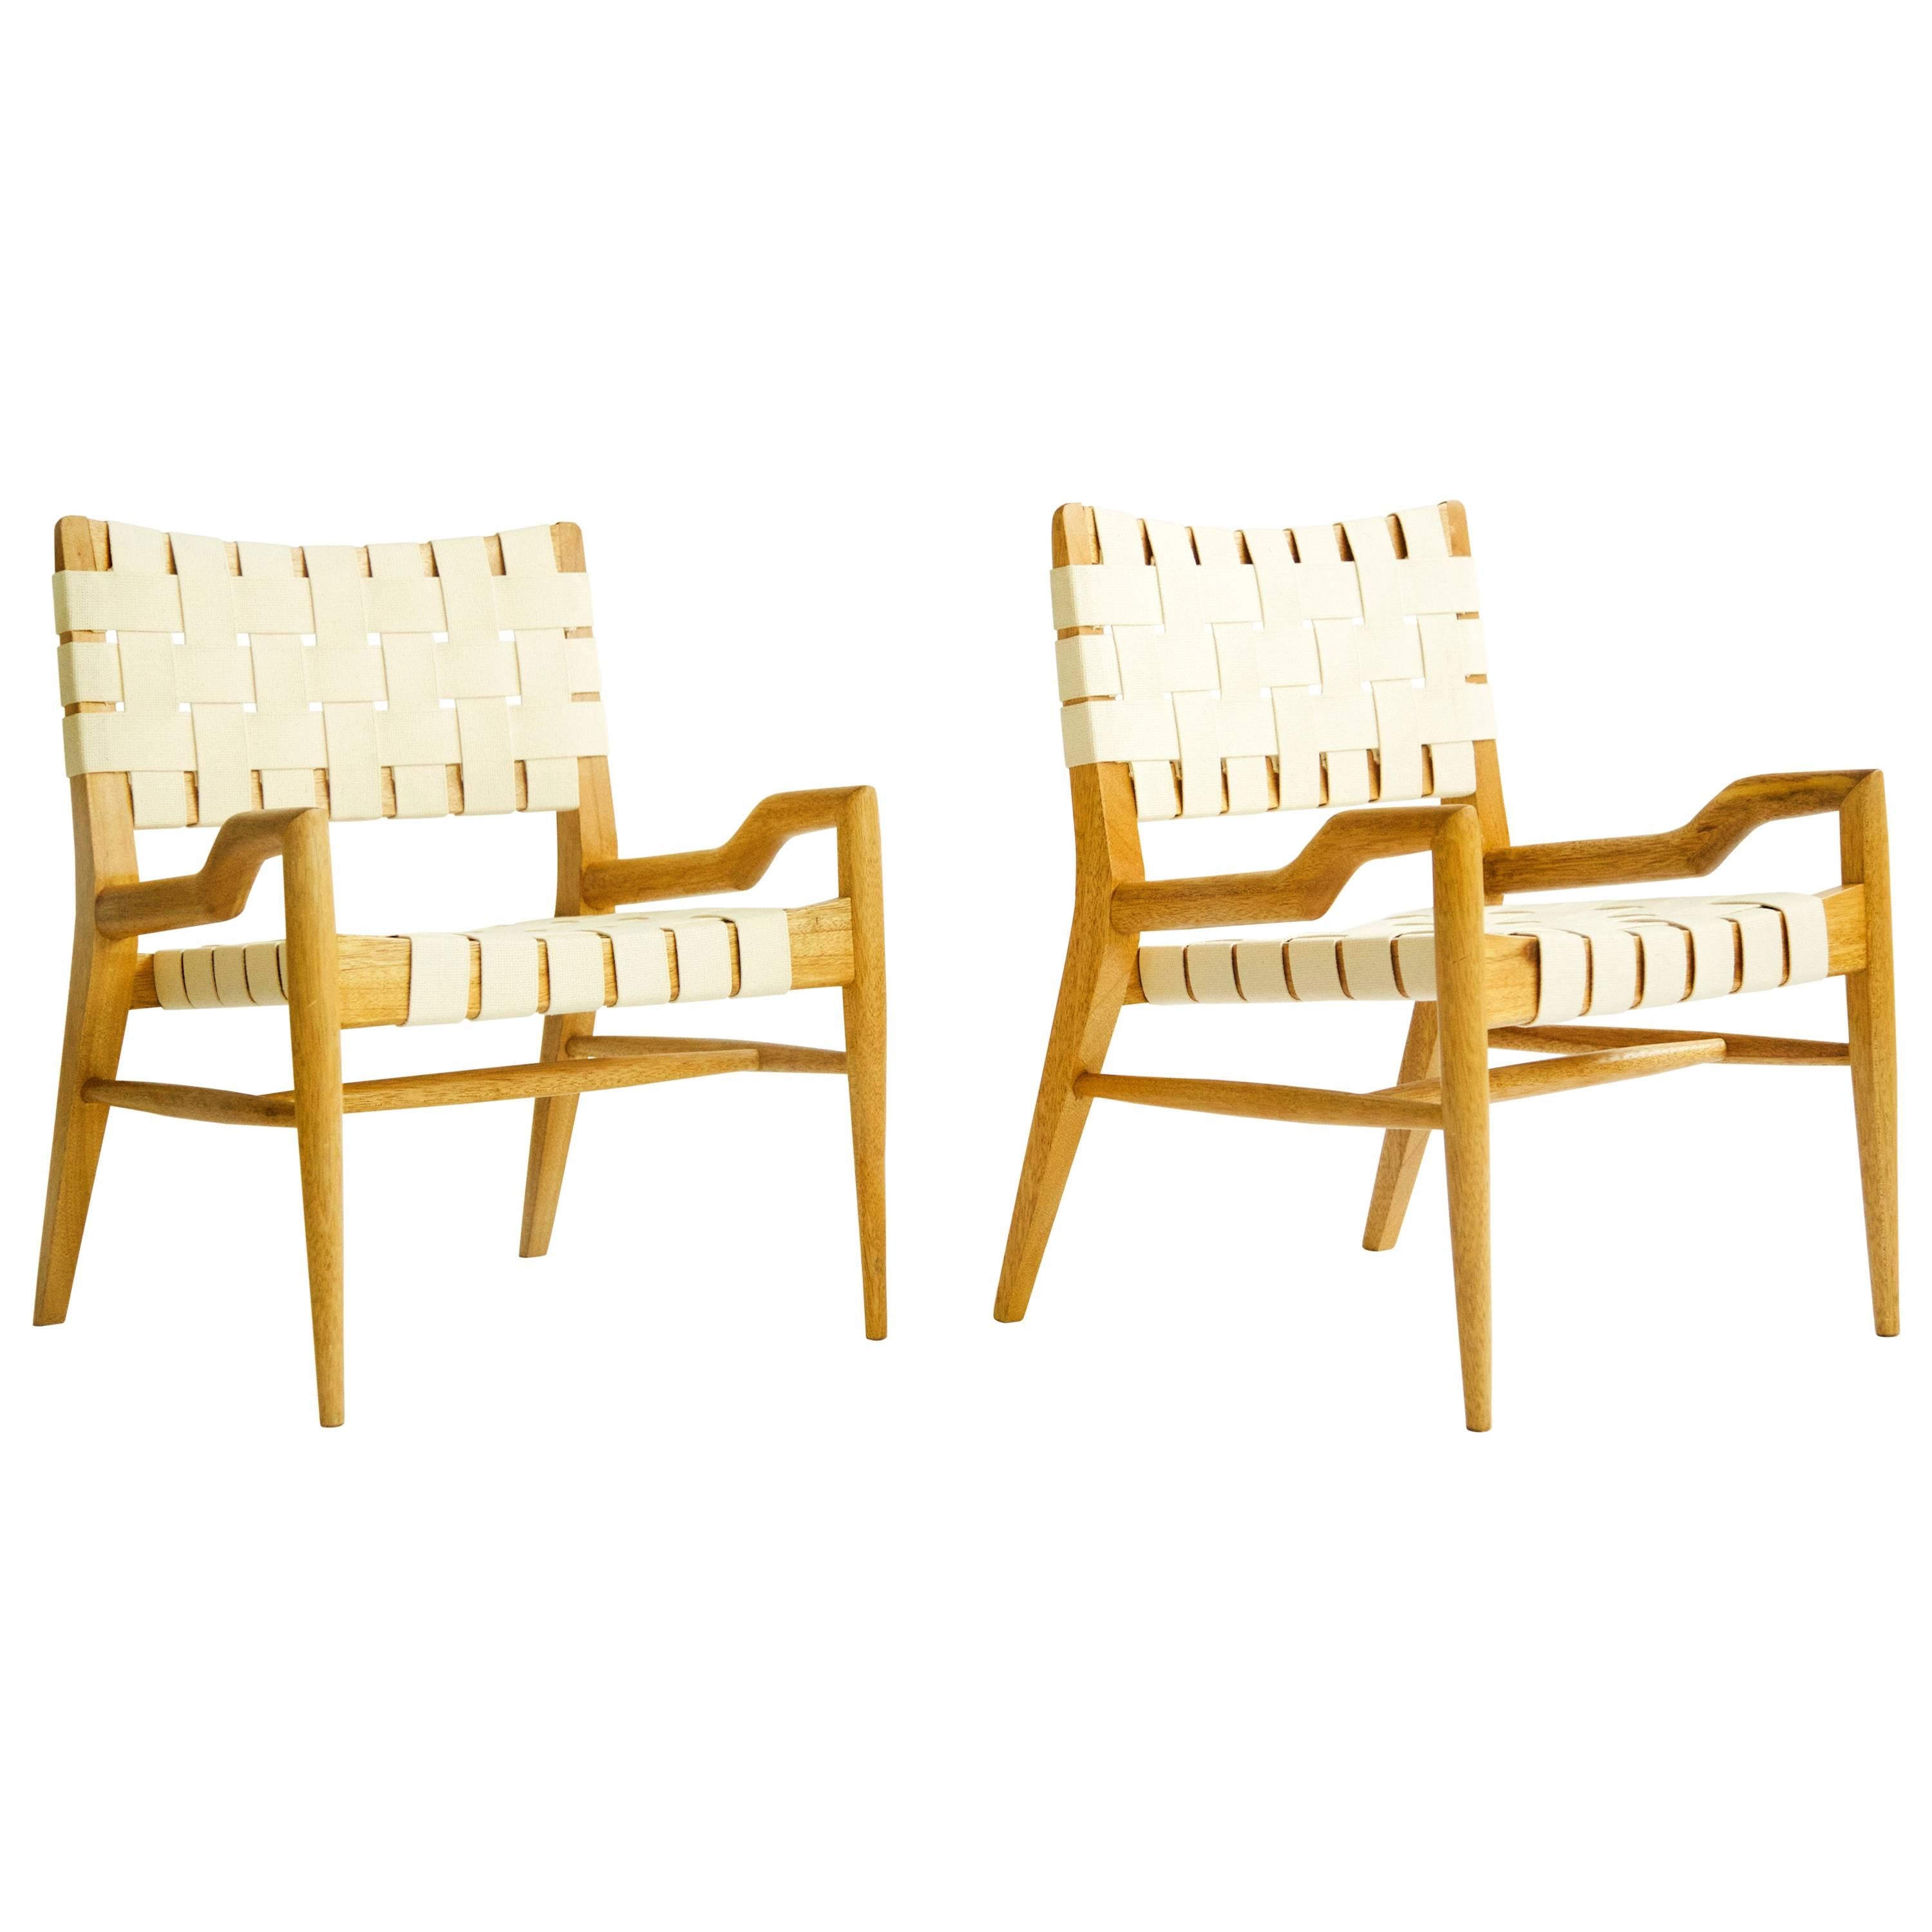 John Keal Lounge Chairs